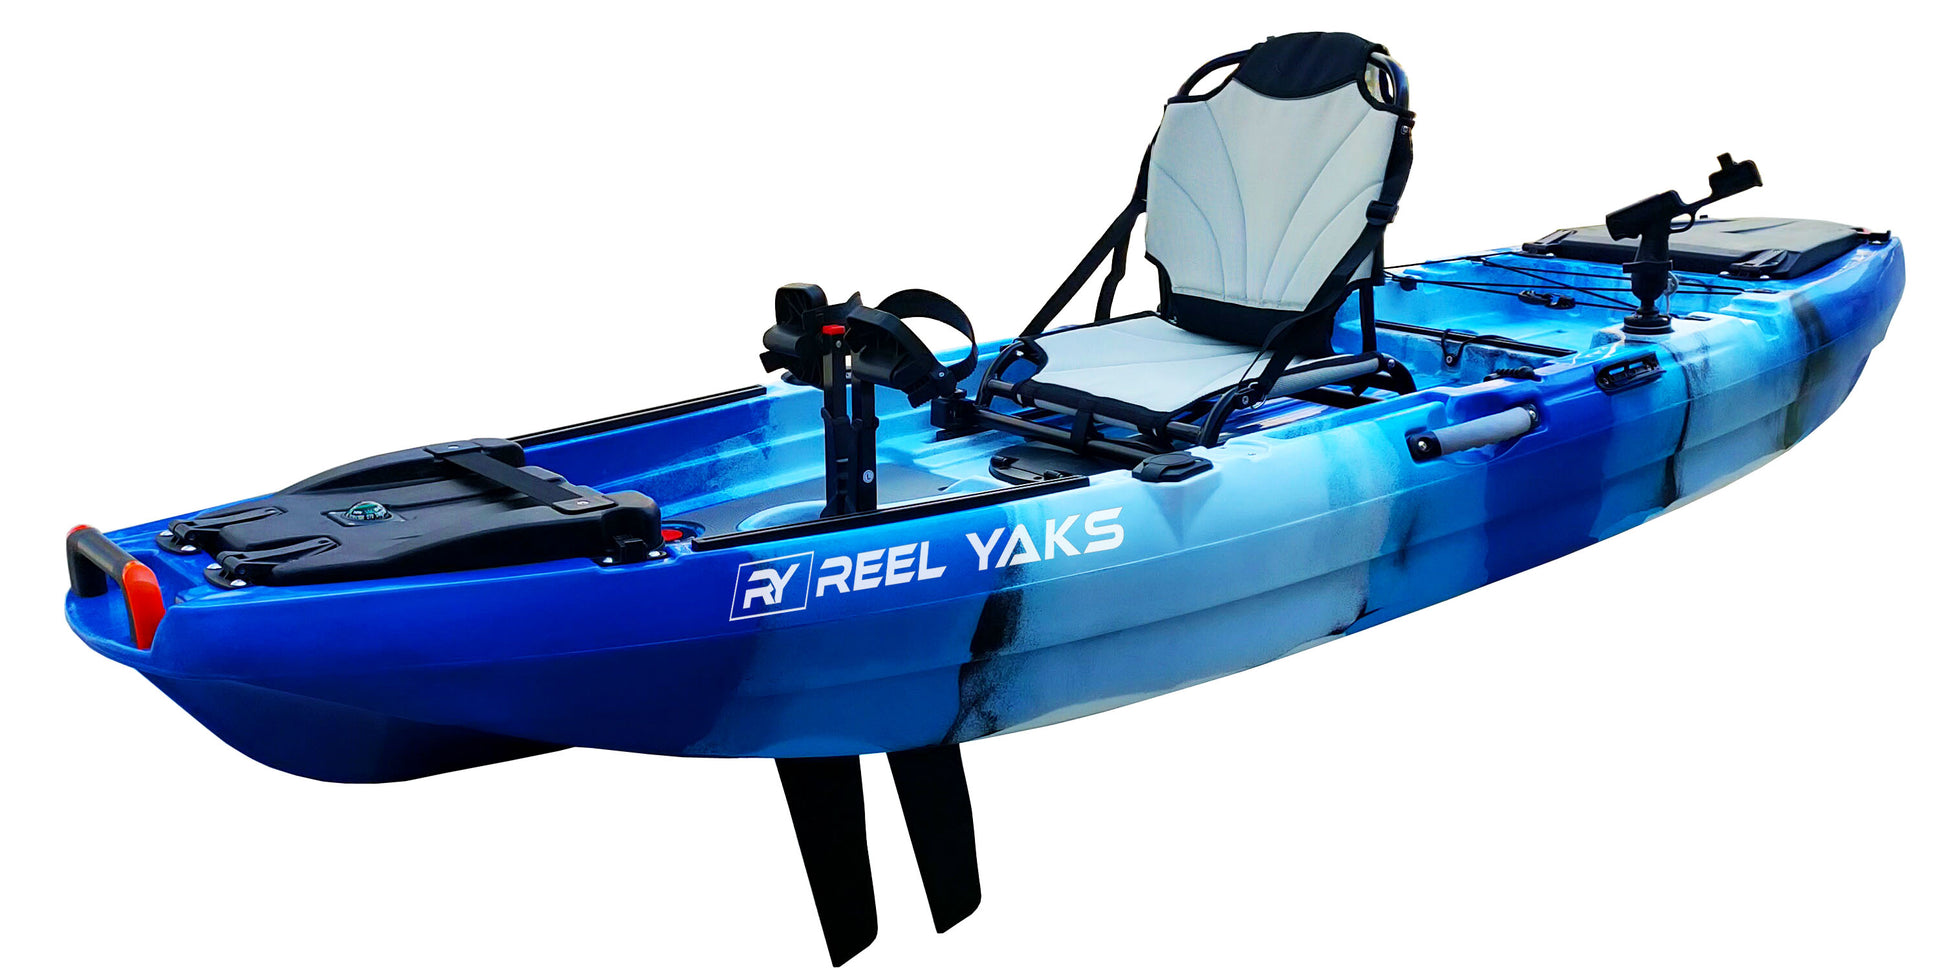 10' Reach Fin Drive Fishing Kayak, Adults youths kids